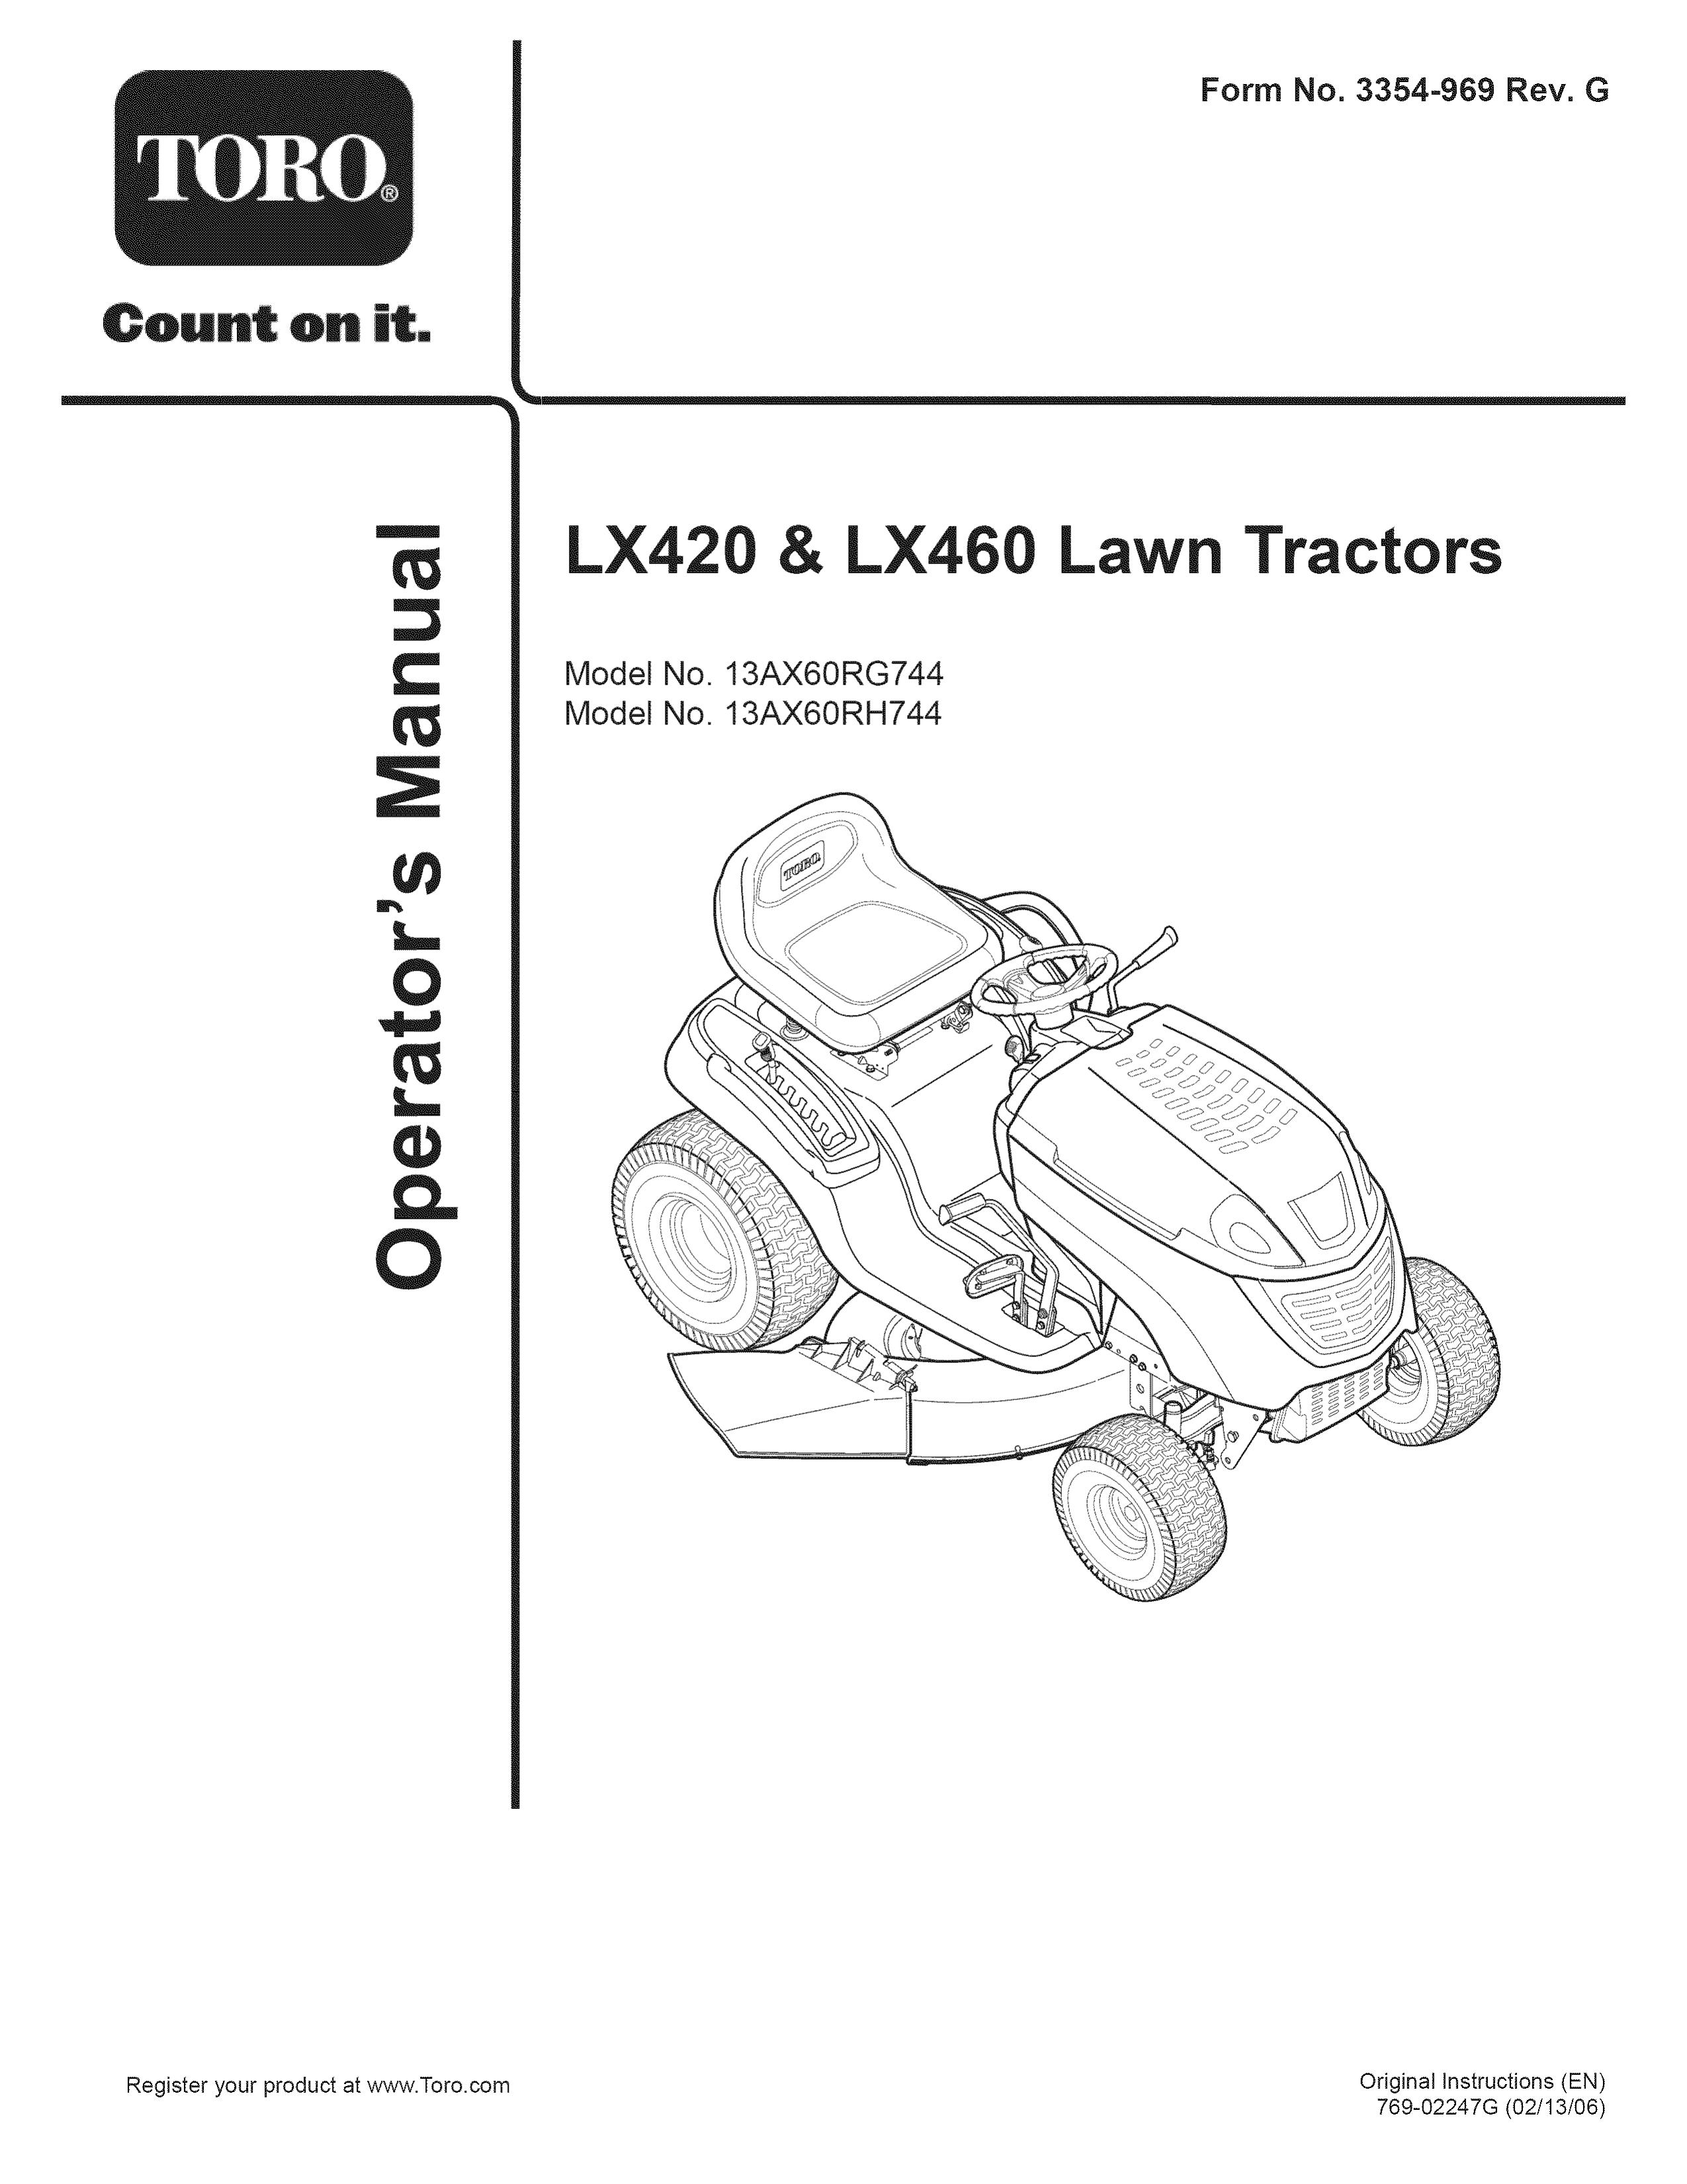 Toro 13AX60RH744 Lawn Mower User Manual